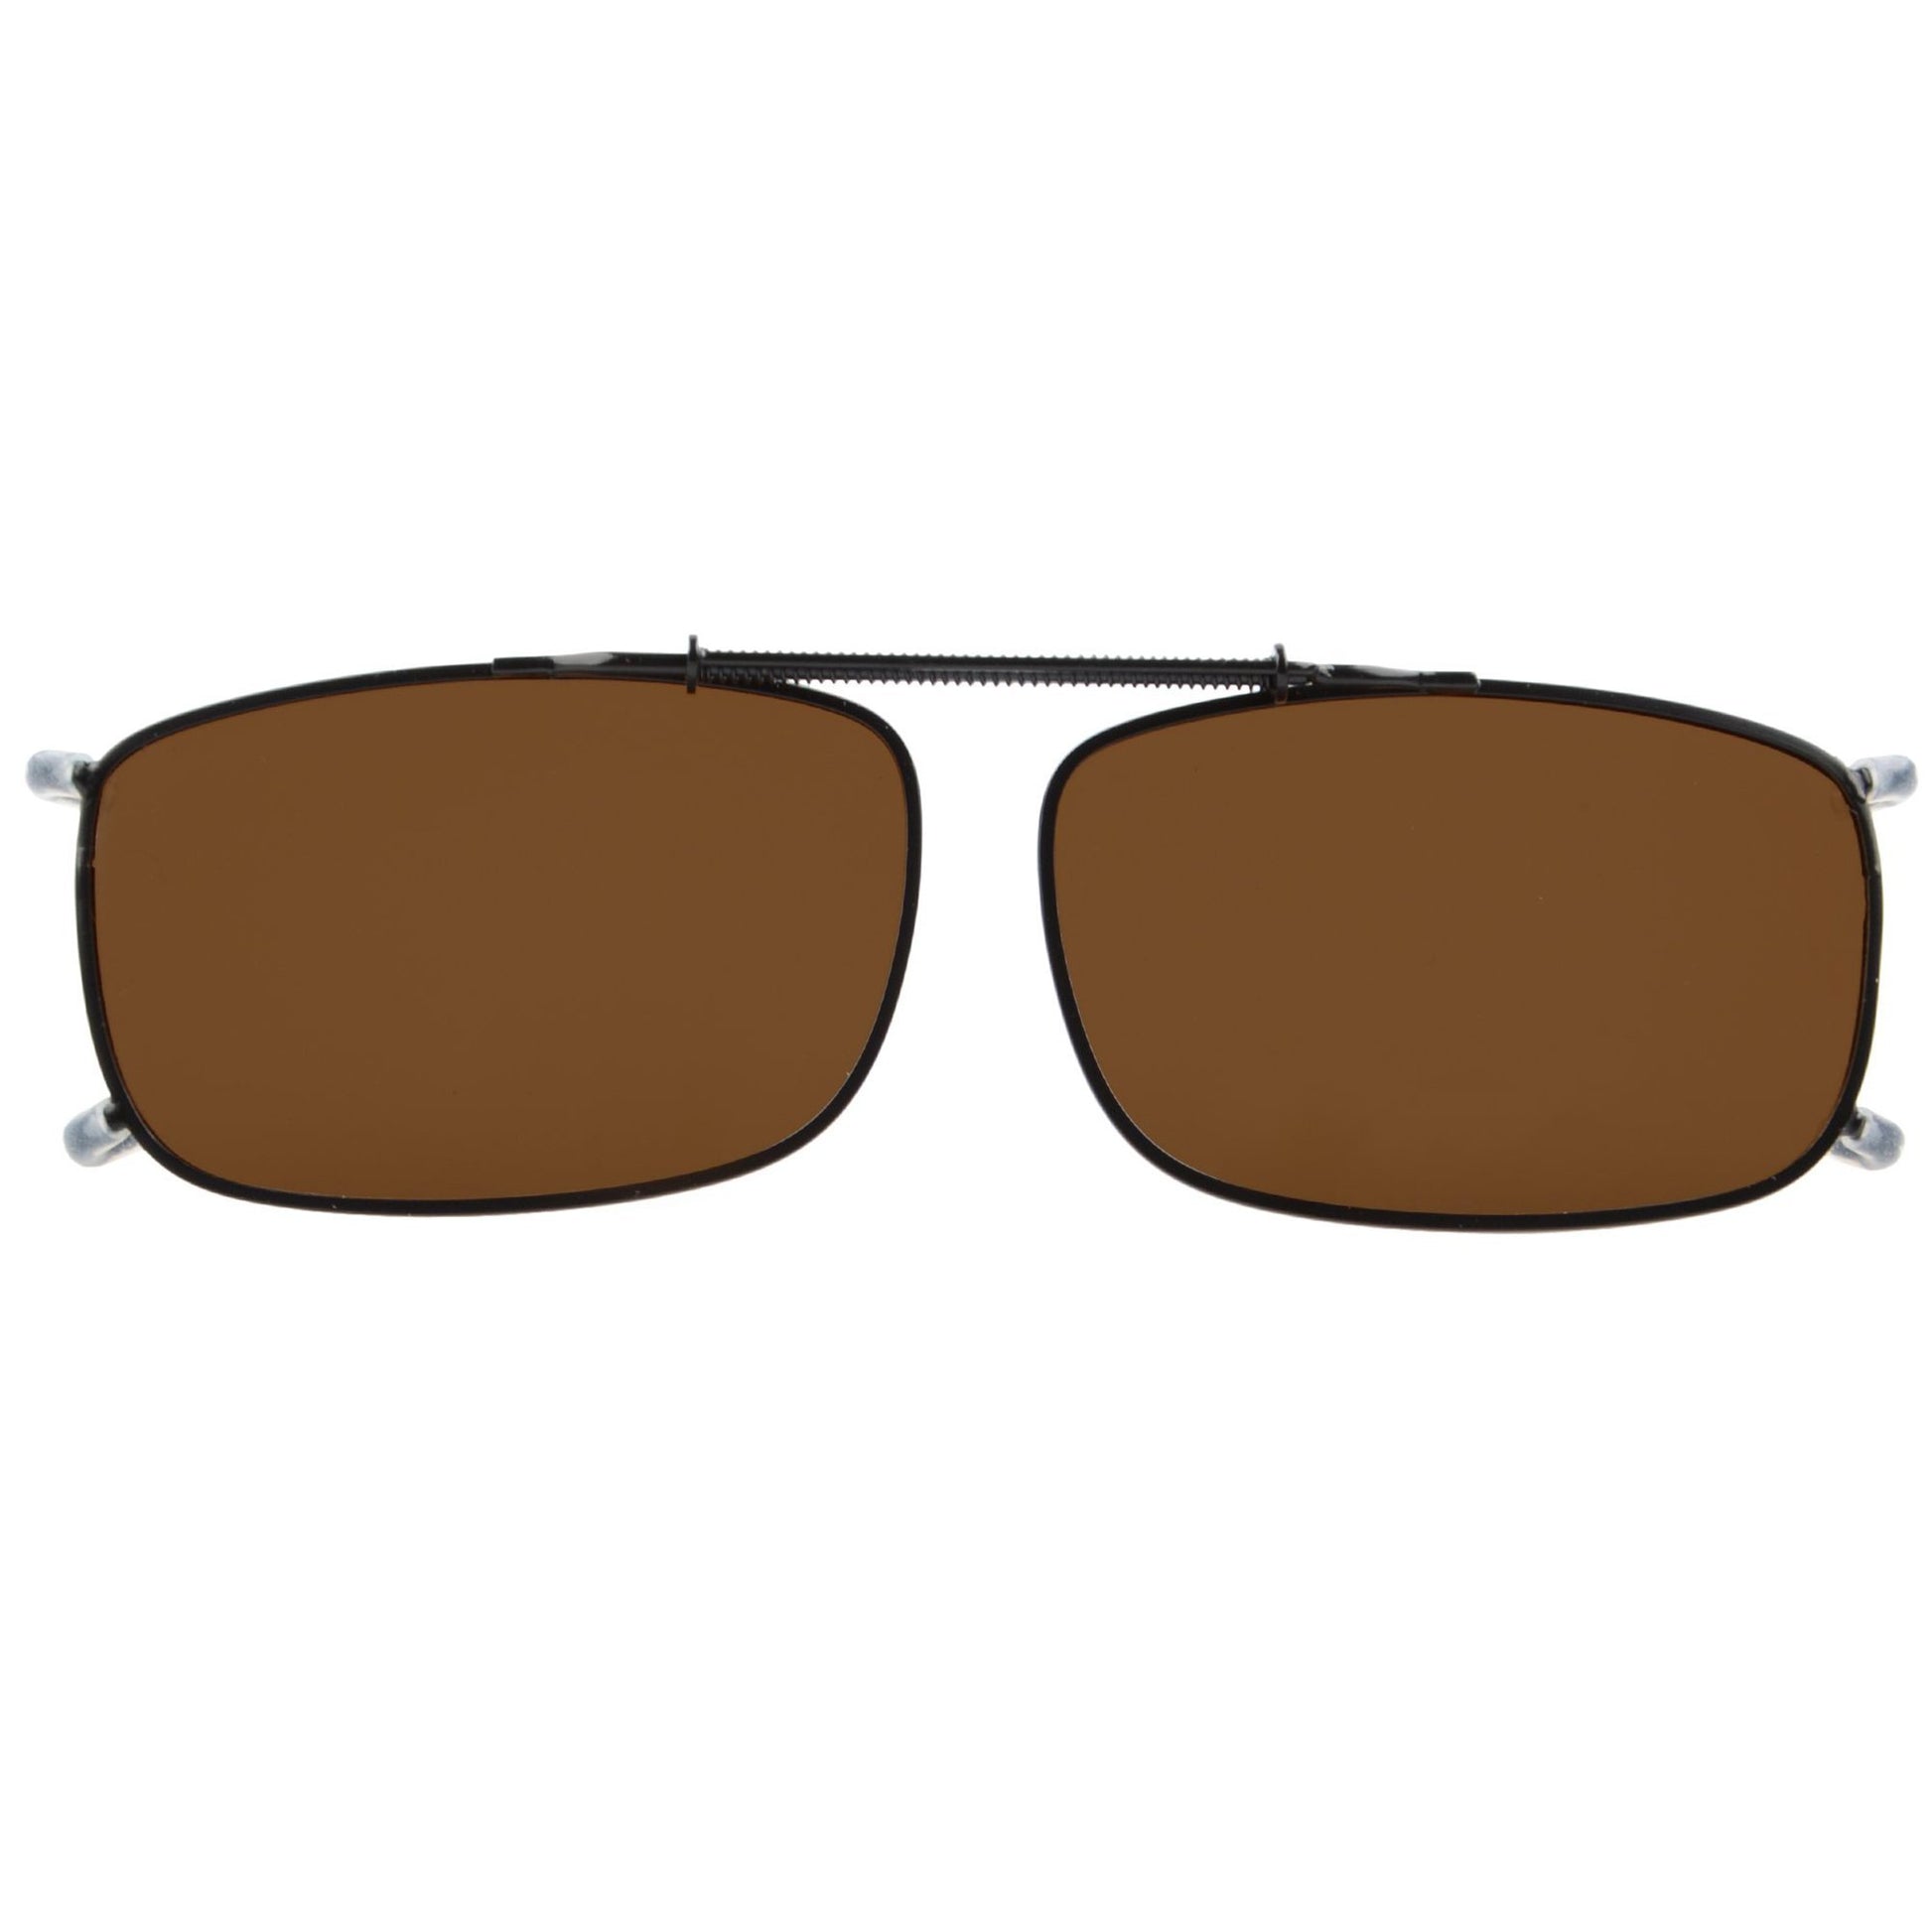 Sunglasses Clip On Polarized Brown C63